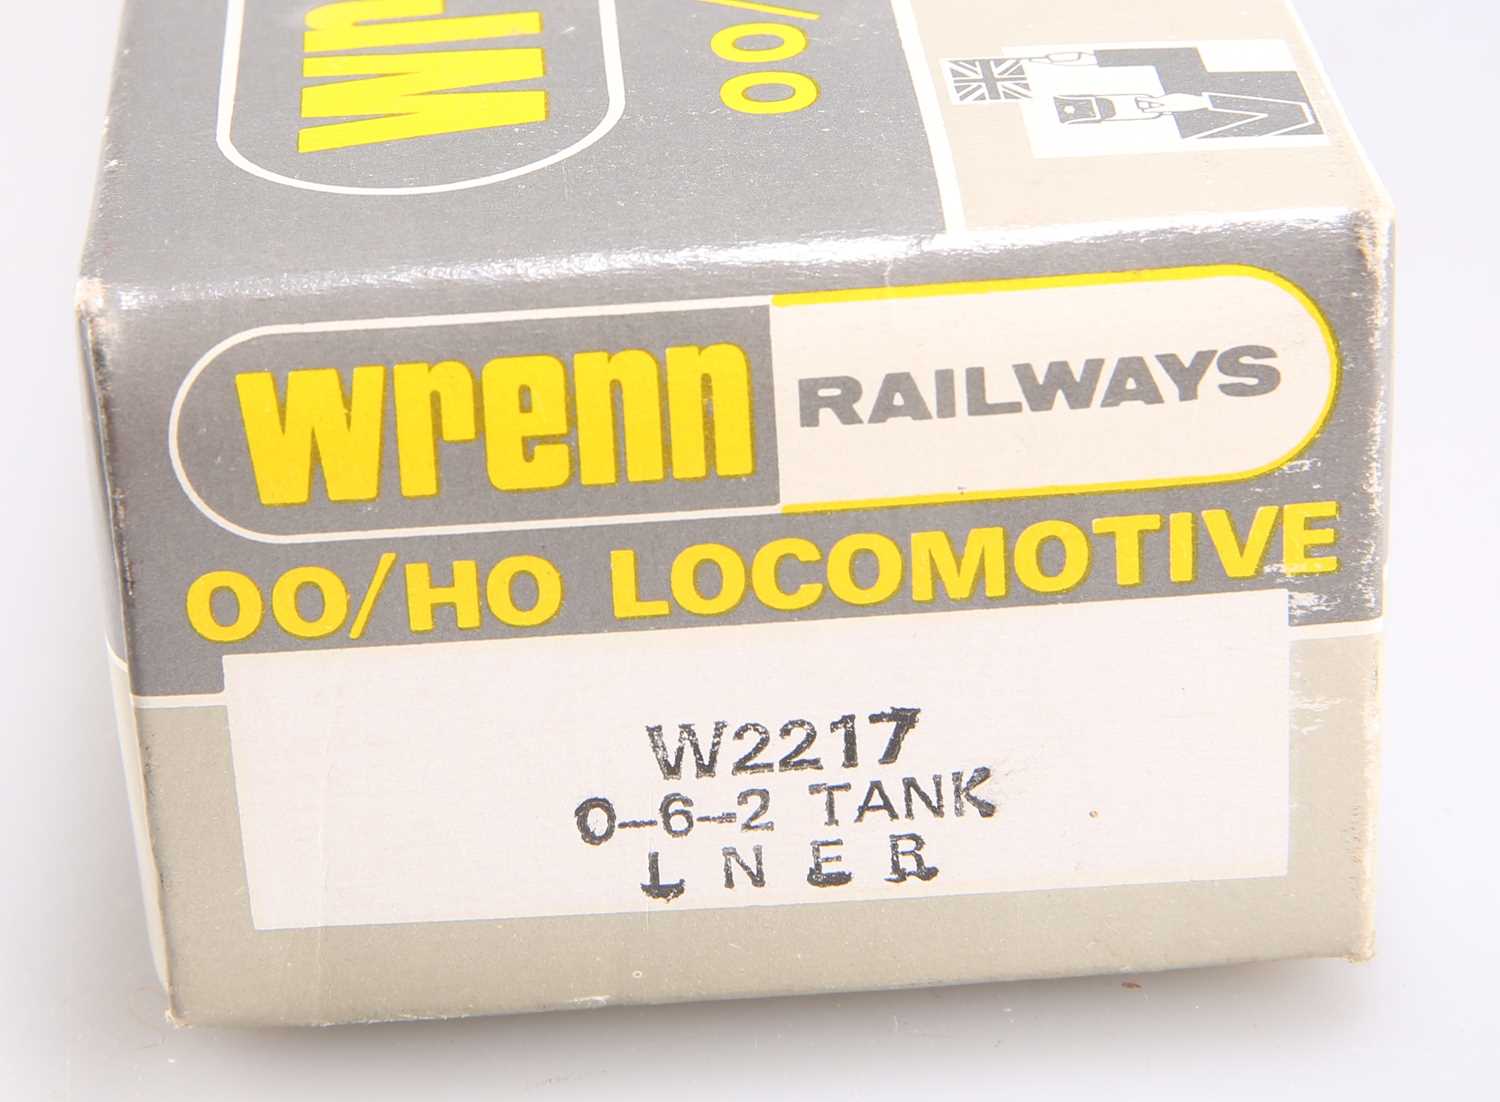 A WRENN W2217 0-6-2 TANK LNER - Image 2 of 2